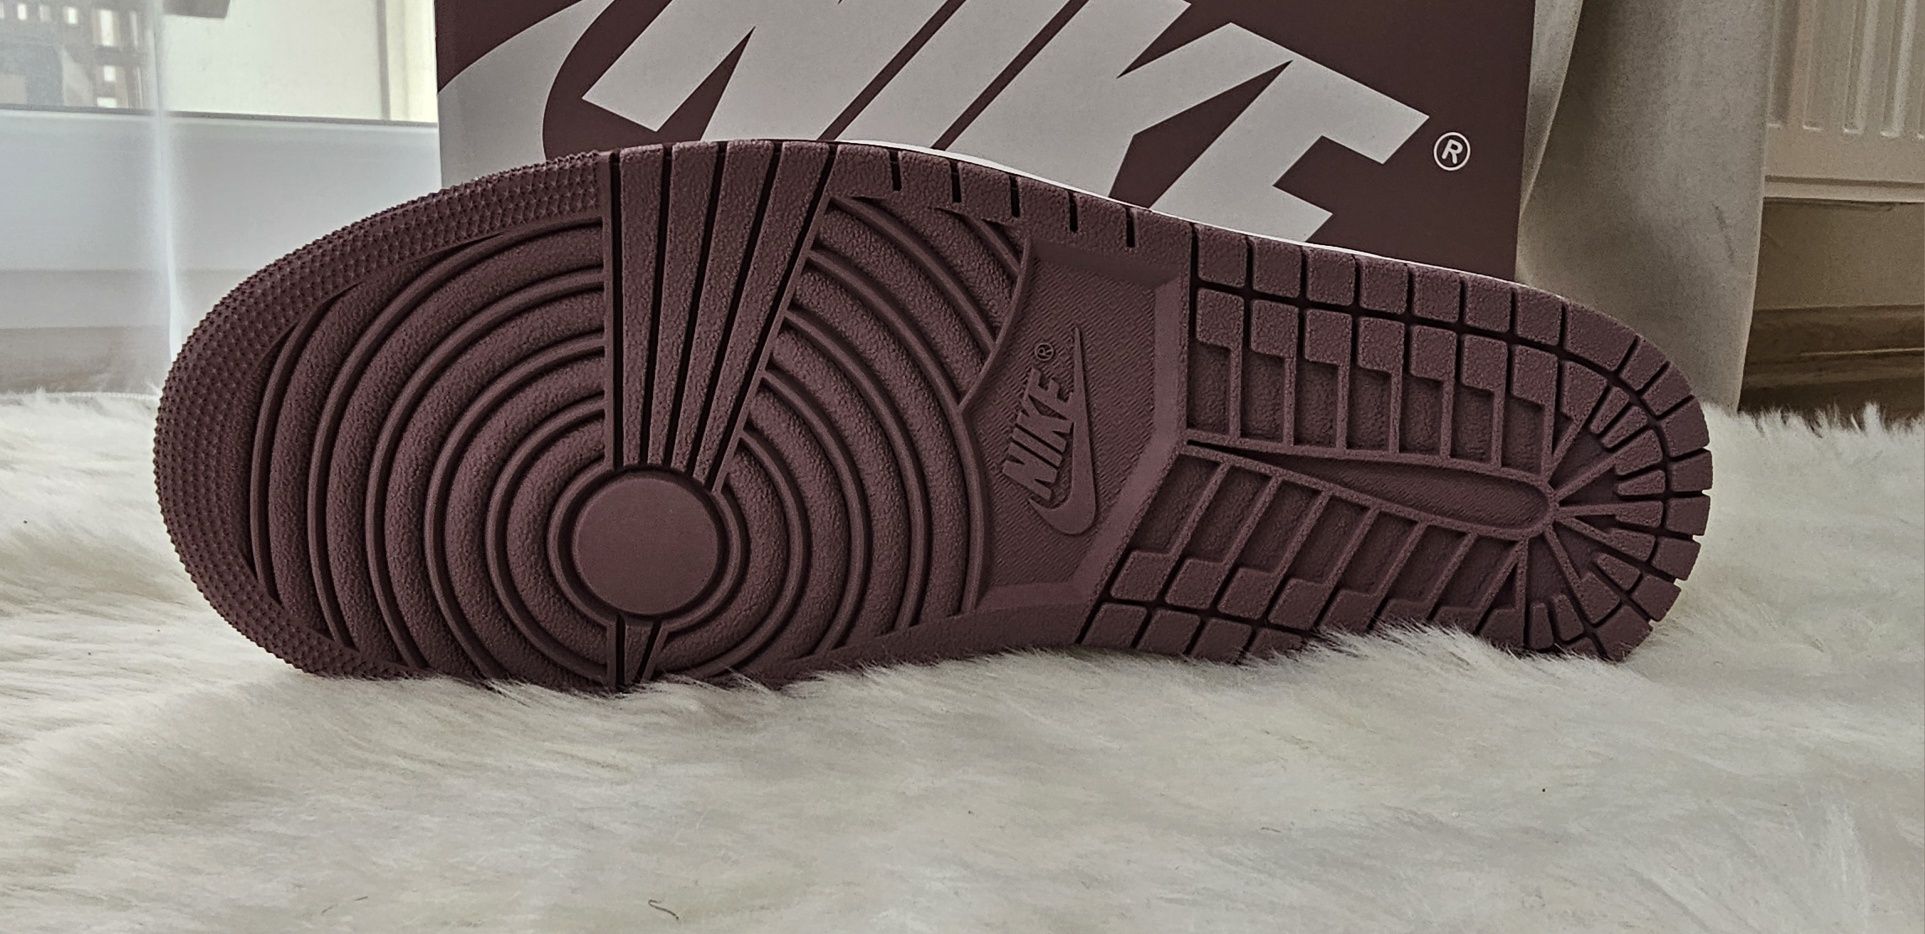 Buty Nike Air Jordan 1 Retro High OG “Mauve” Brązowe